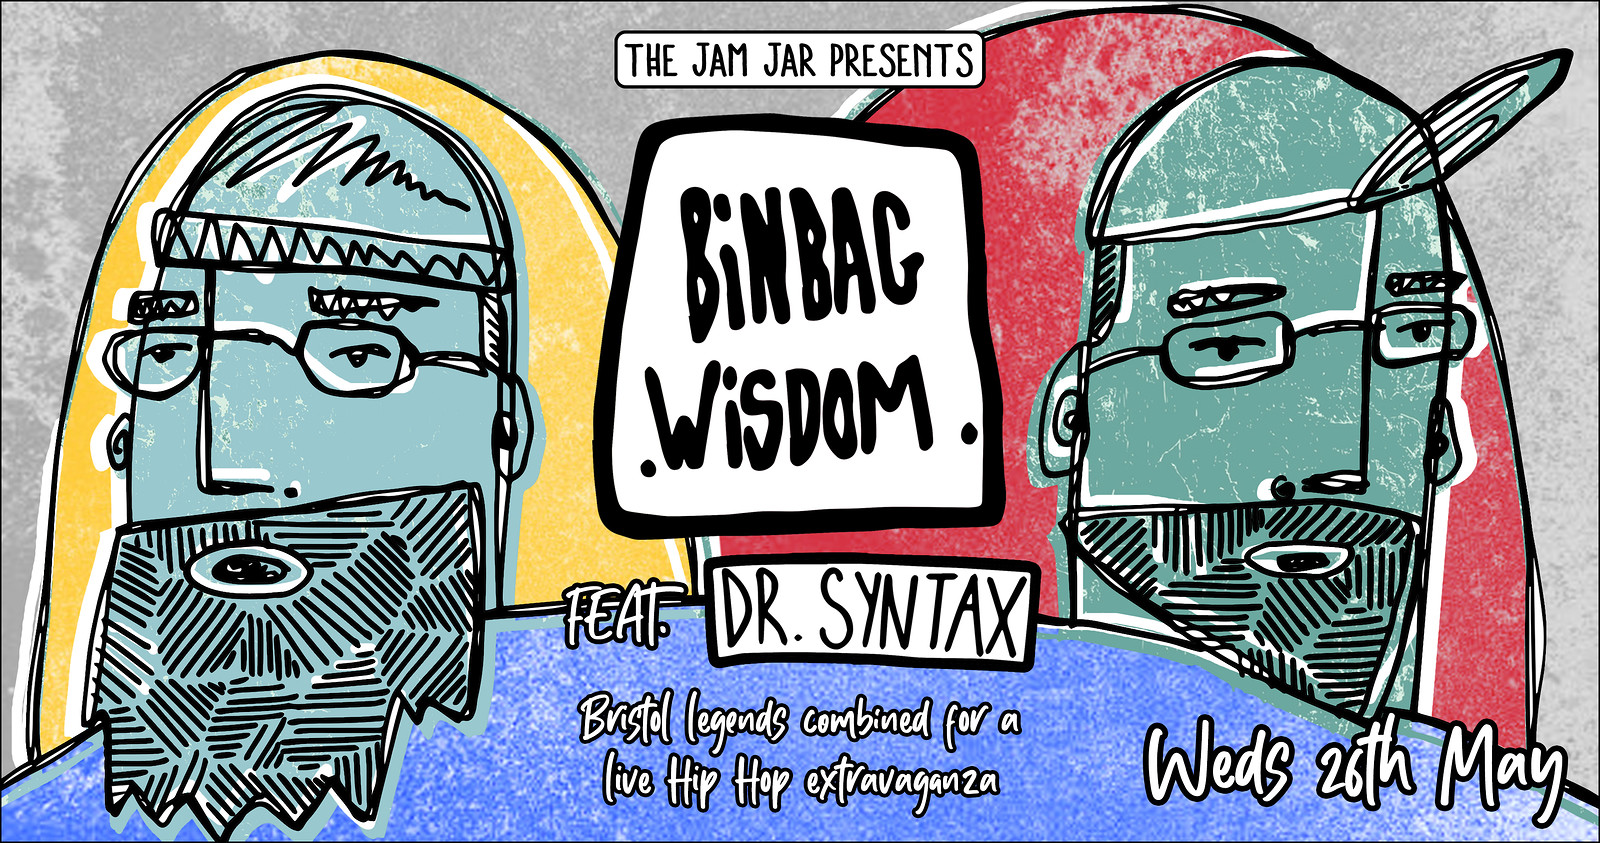 Binbag Wisdom feat. Dr. Syntax at Jam Jar